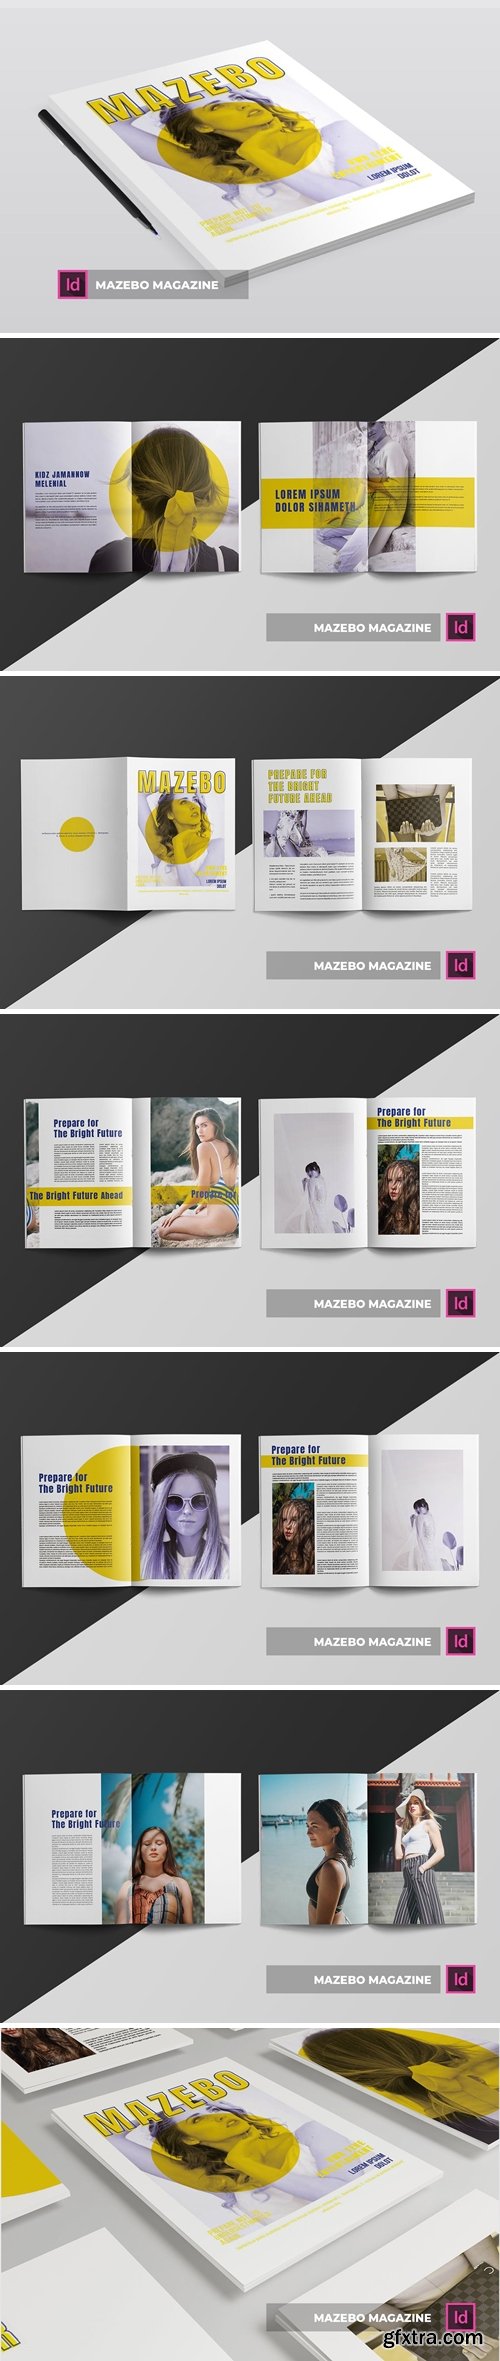 Mazebo | Magazine Template